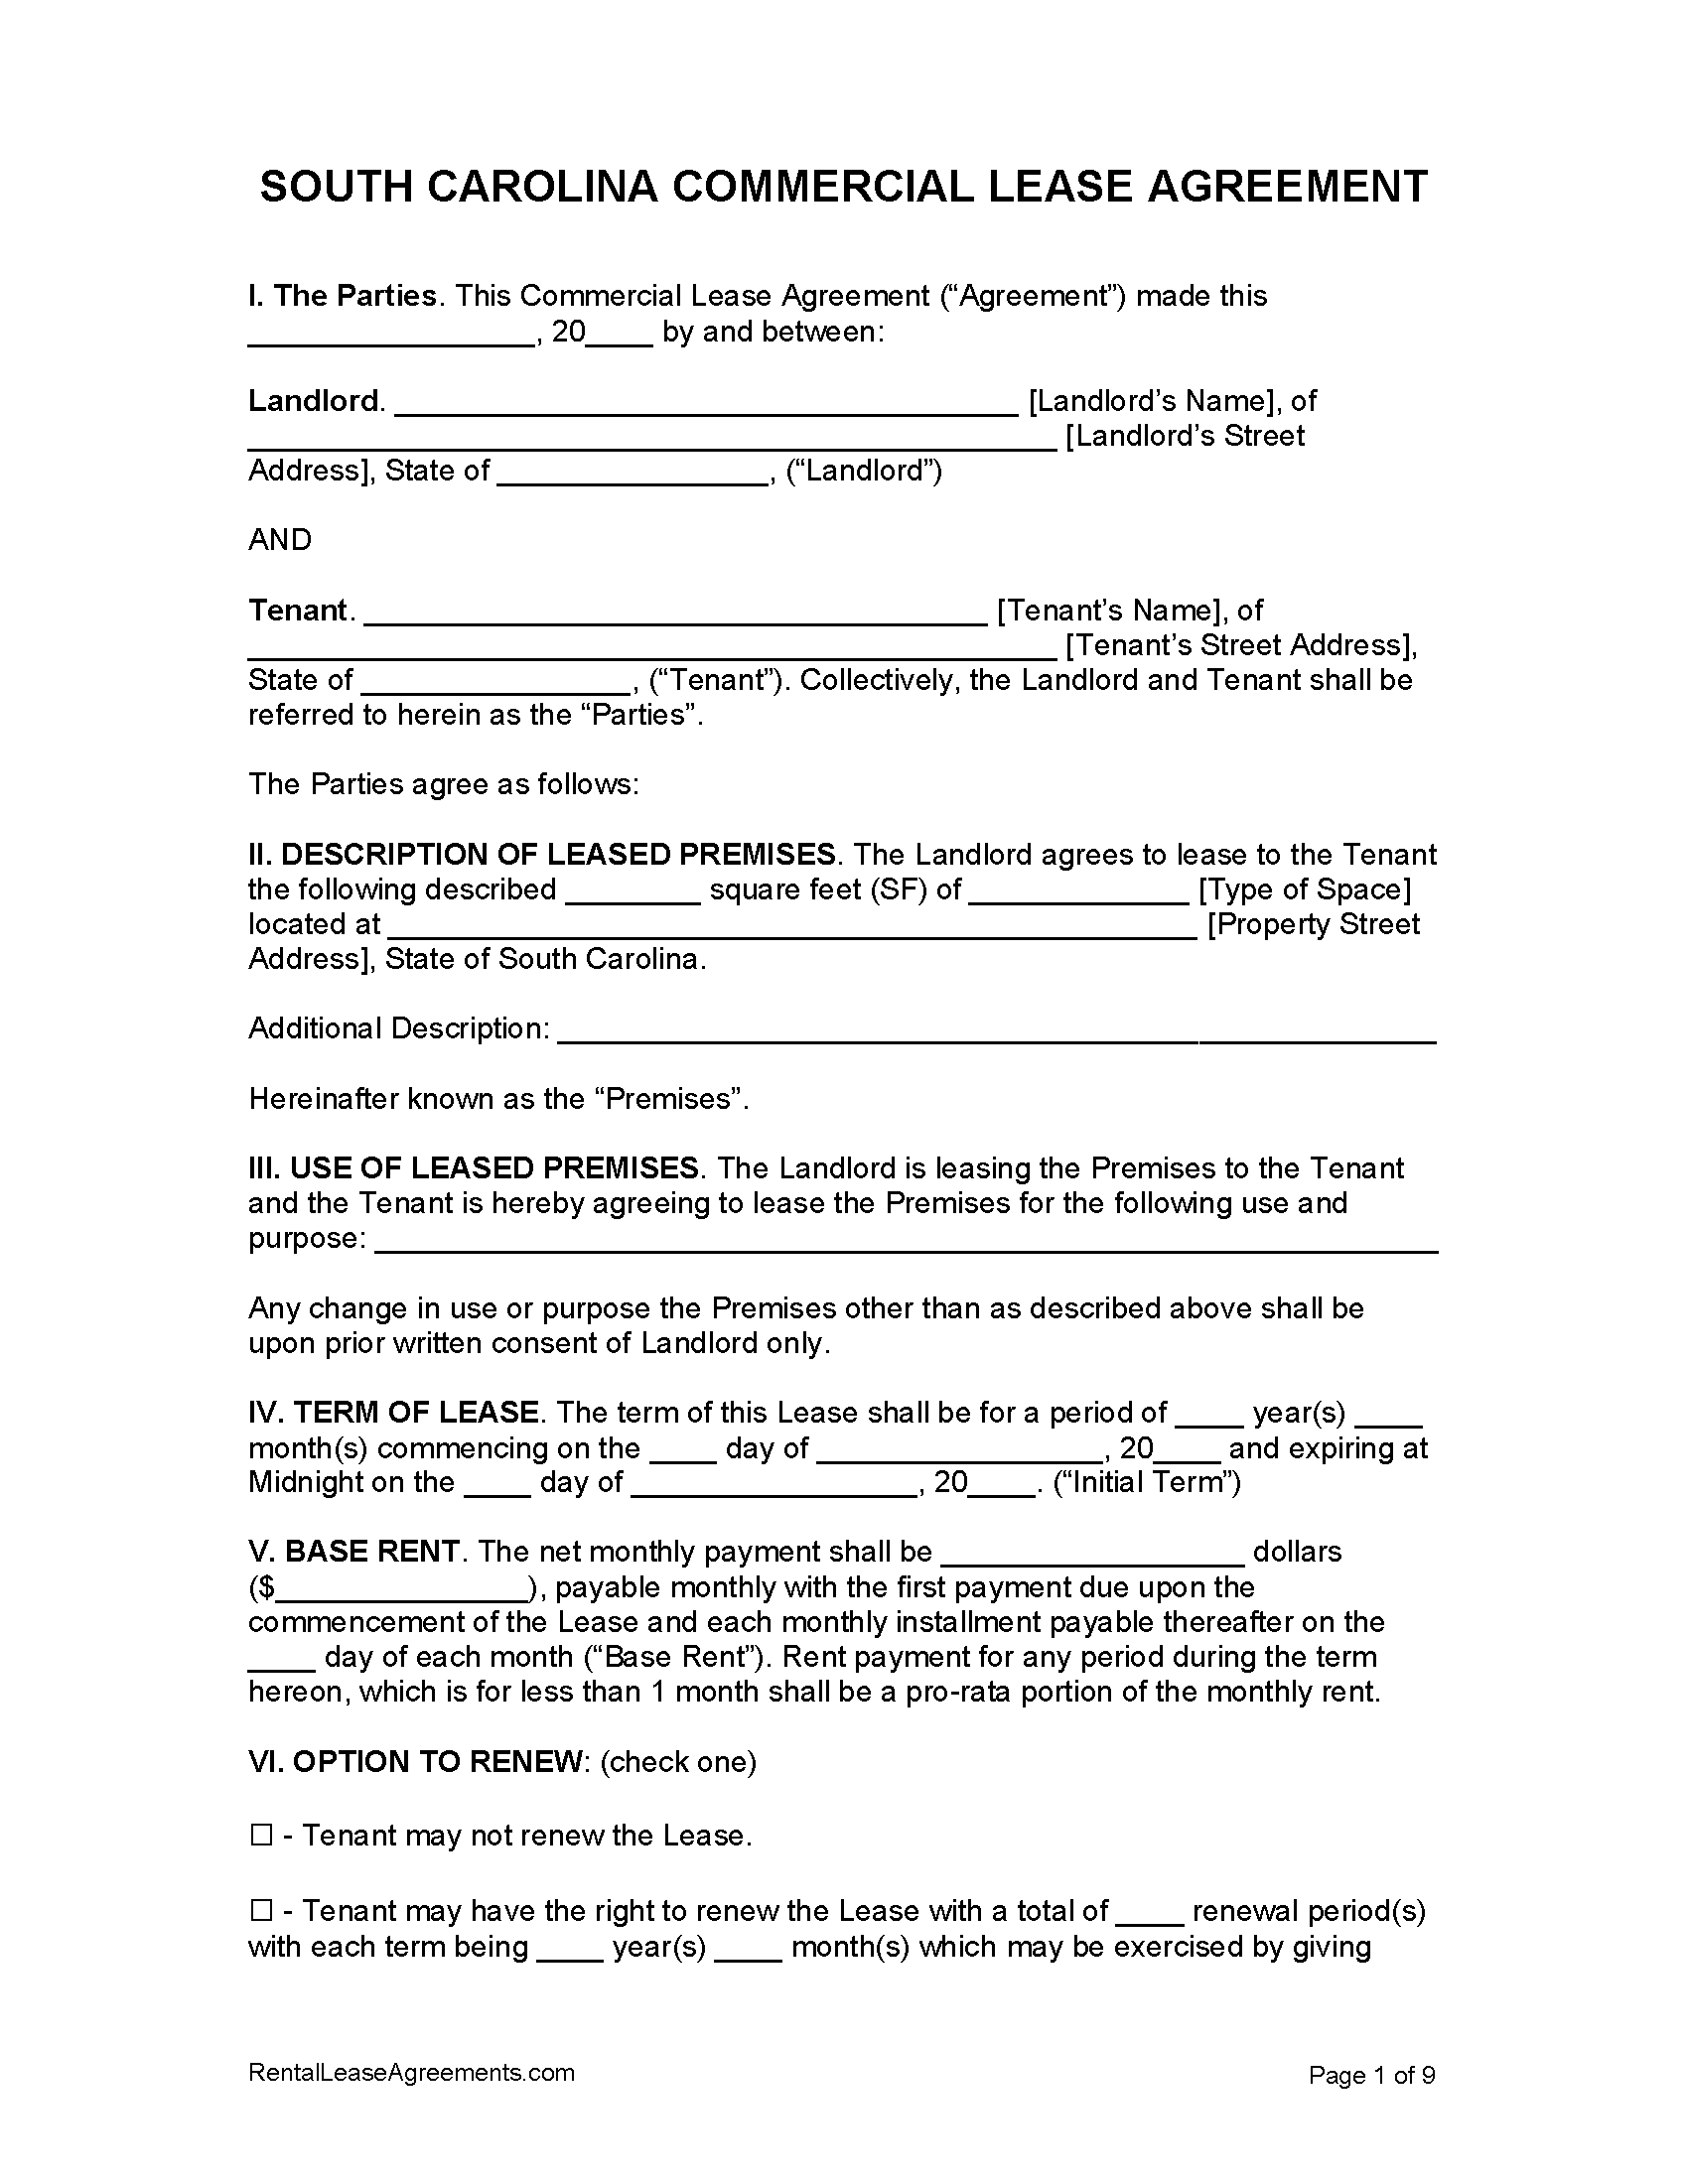 south carolina residential rental agreement form 410 pdf